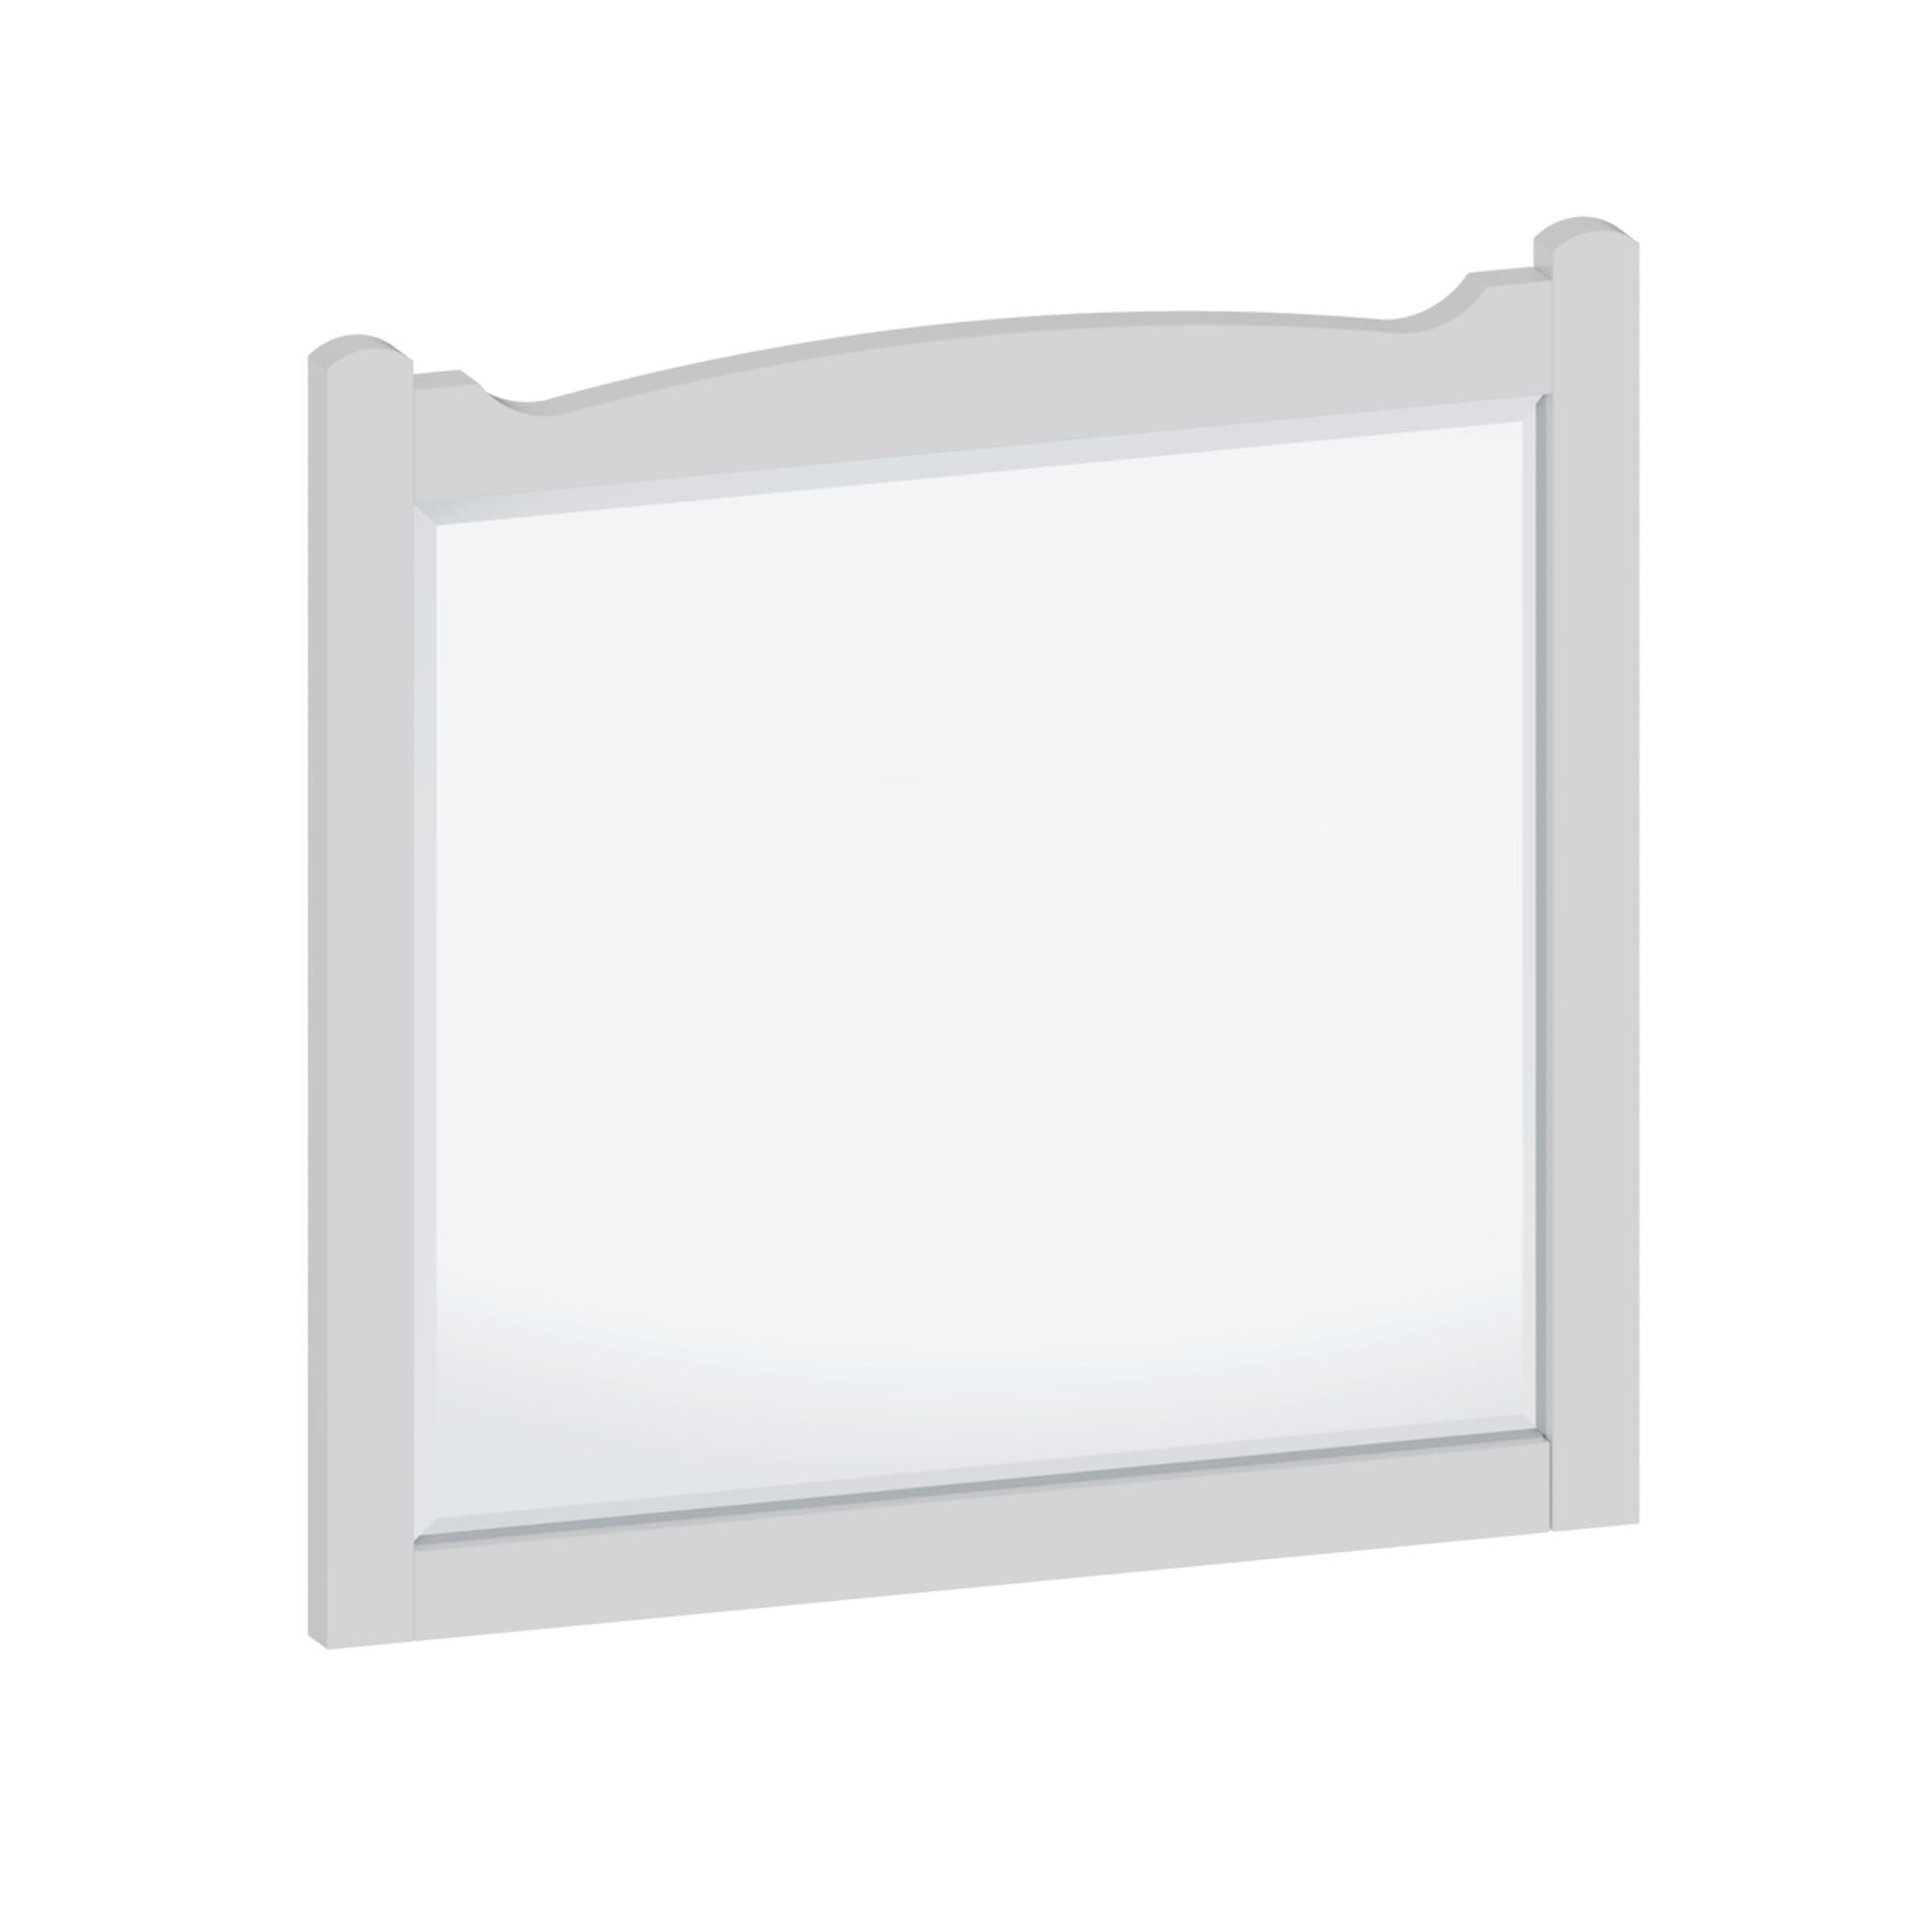 burlington guild 600 framed bathroom mirror varley white